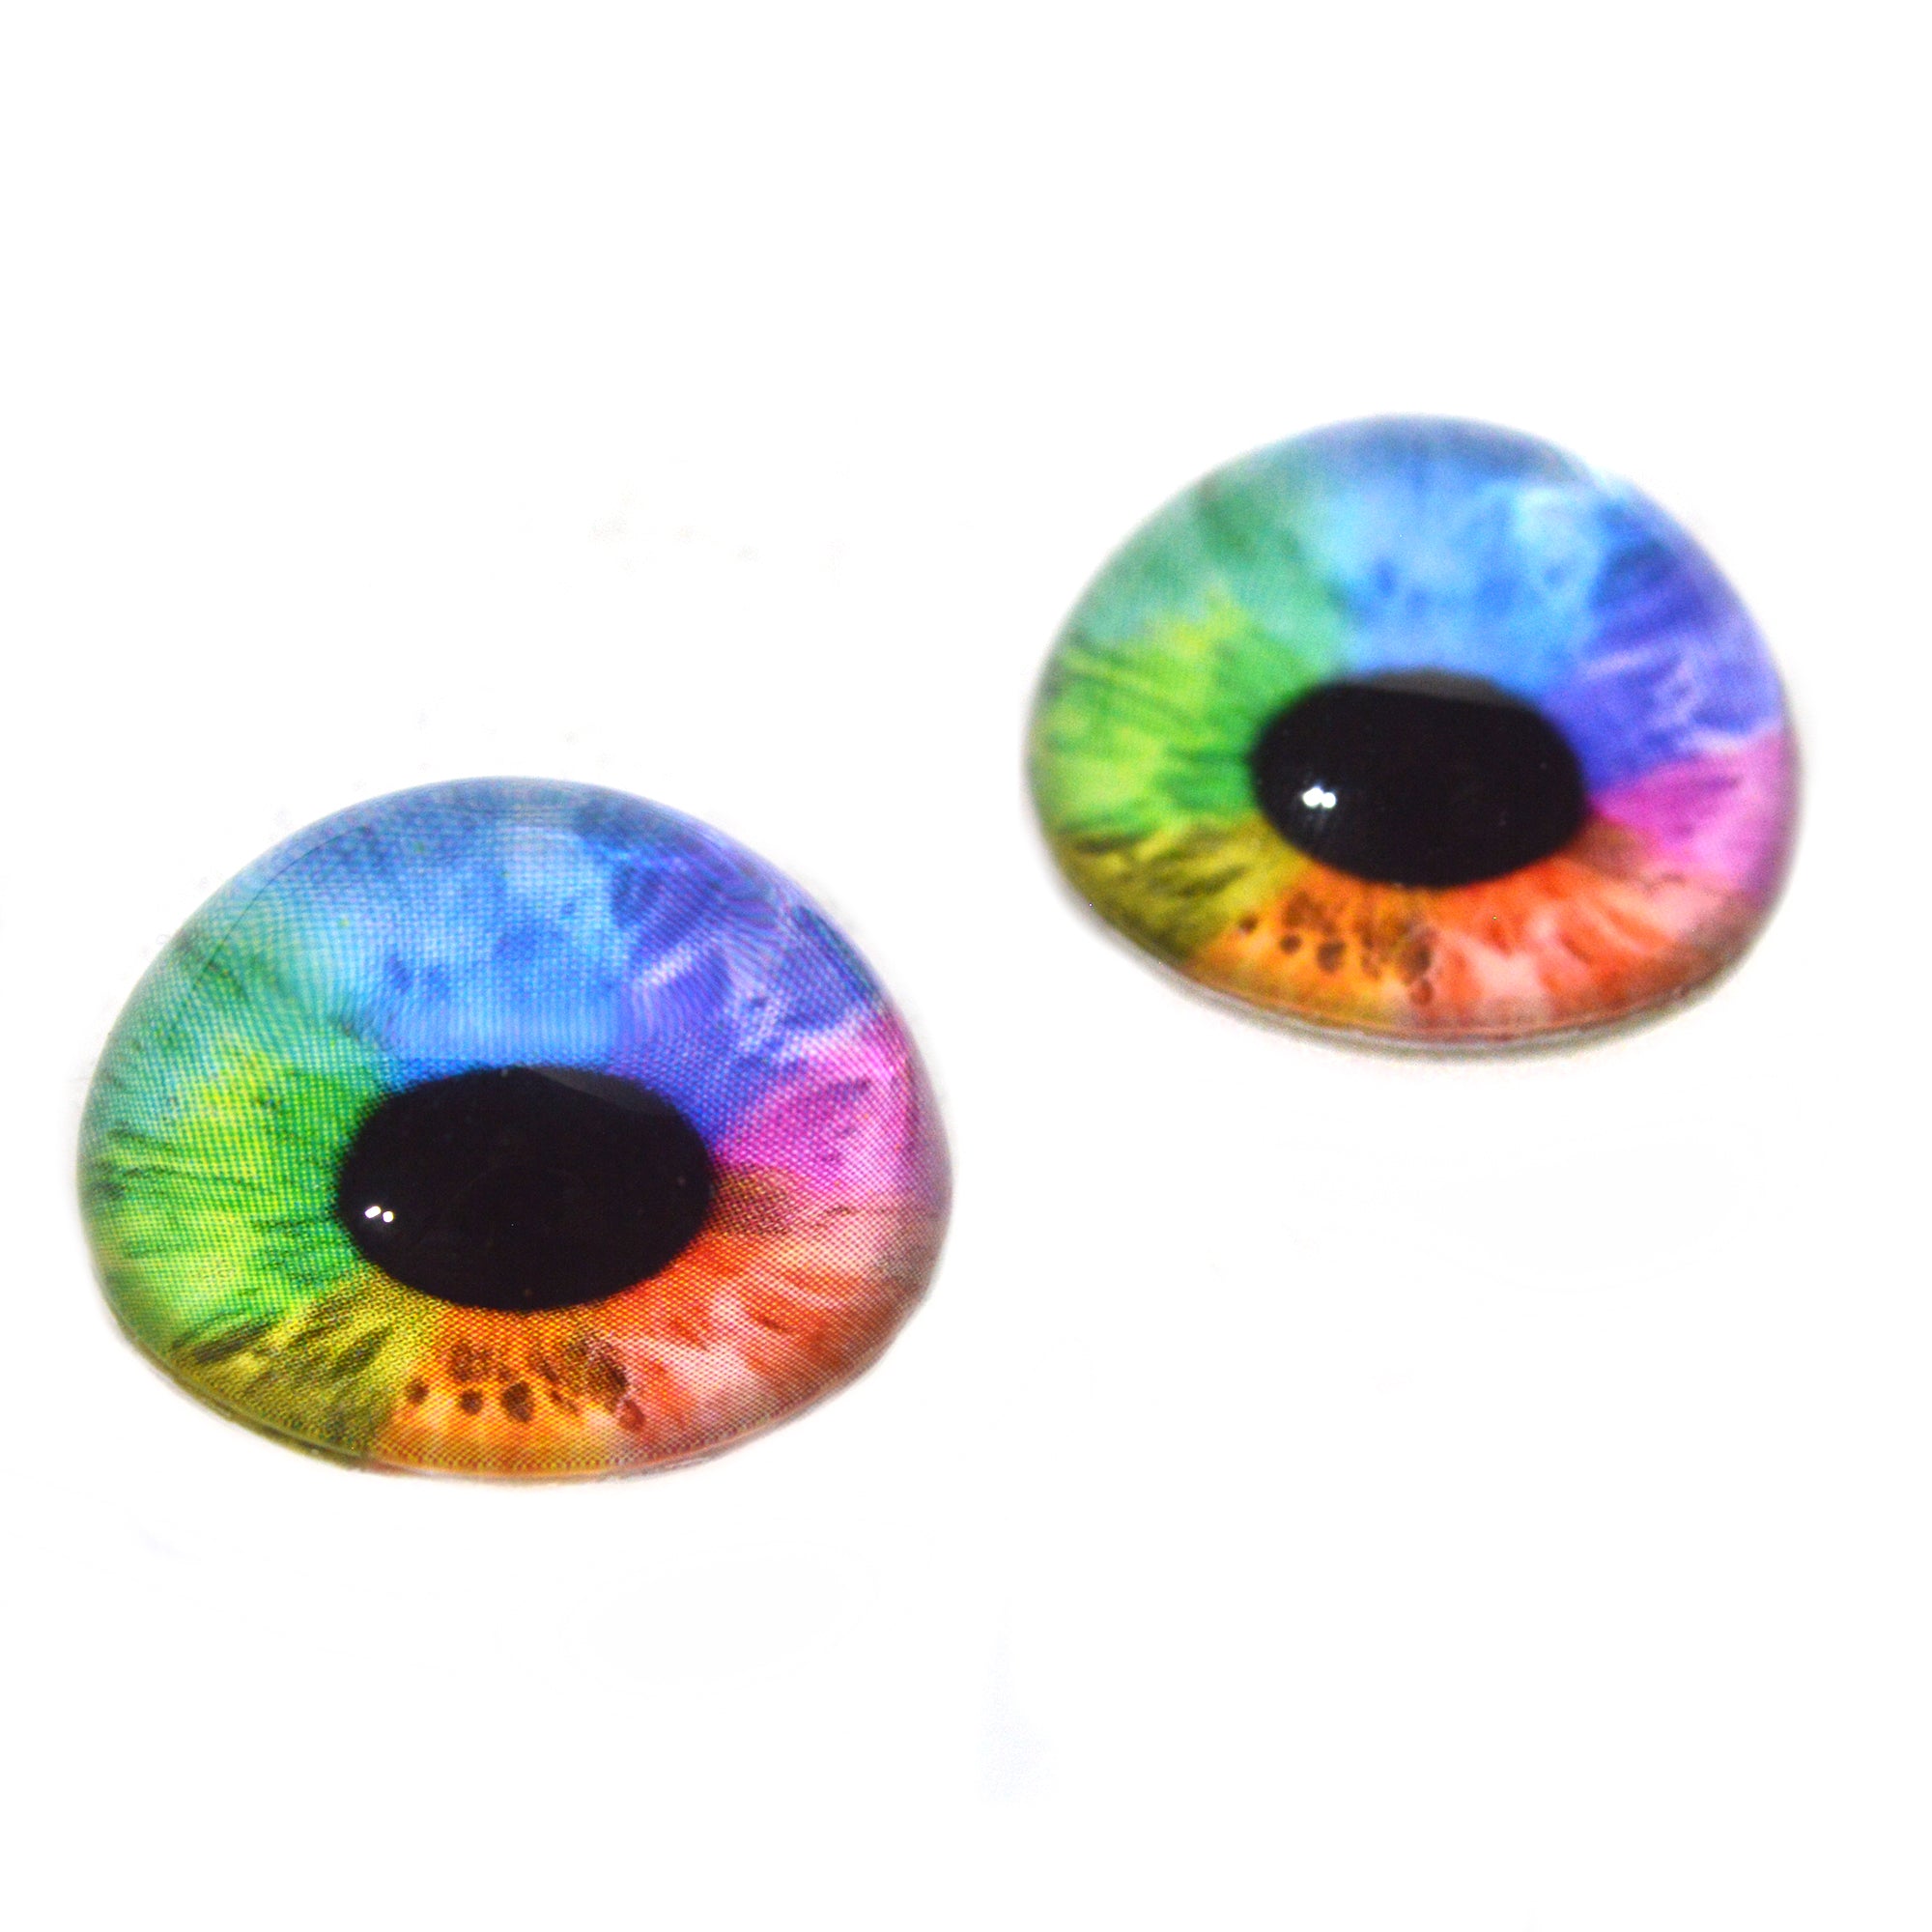 Bright Neon Green Glass Eyes – Handmade Glass Eyes